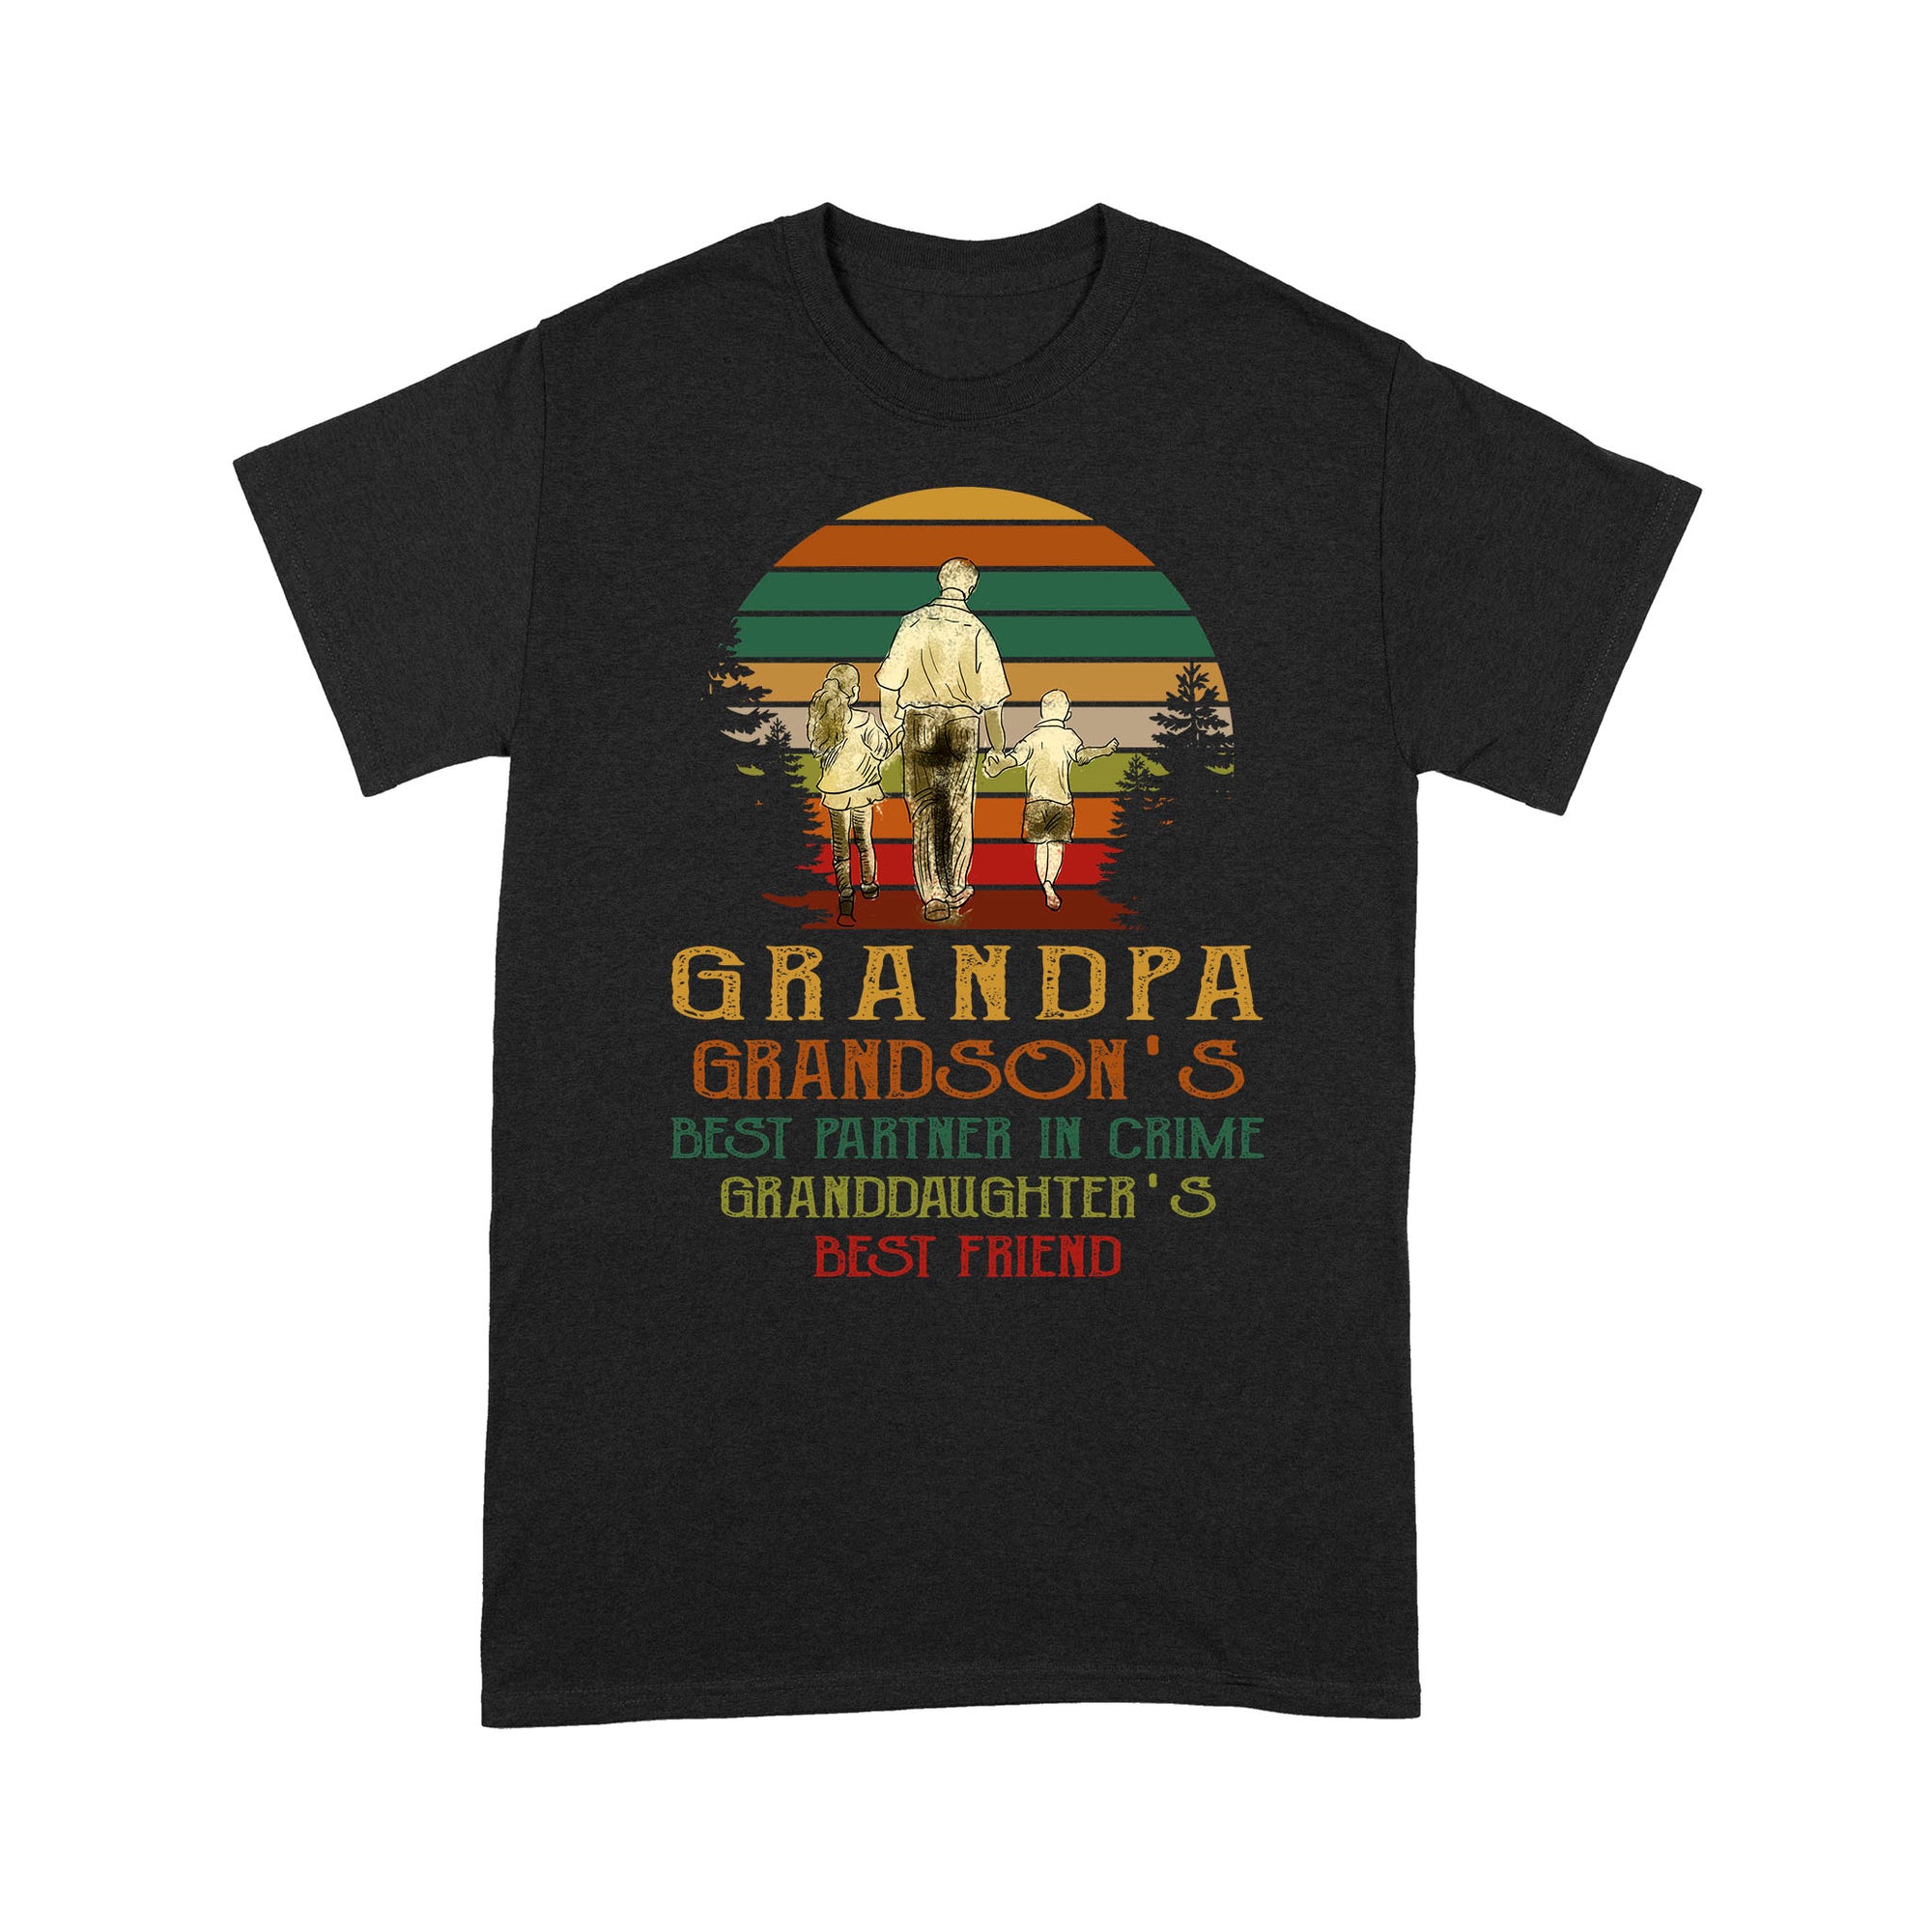 Grandpa Grandson's Best Partner In Crime Granddaughter's Best Friend, Classic Vintage, Father's Day Gift - Standard T-shirt